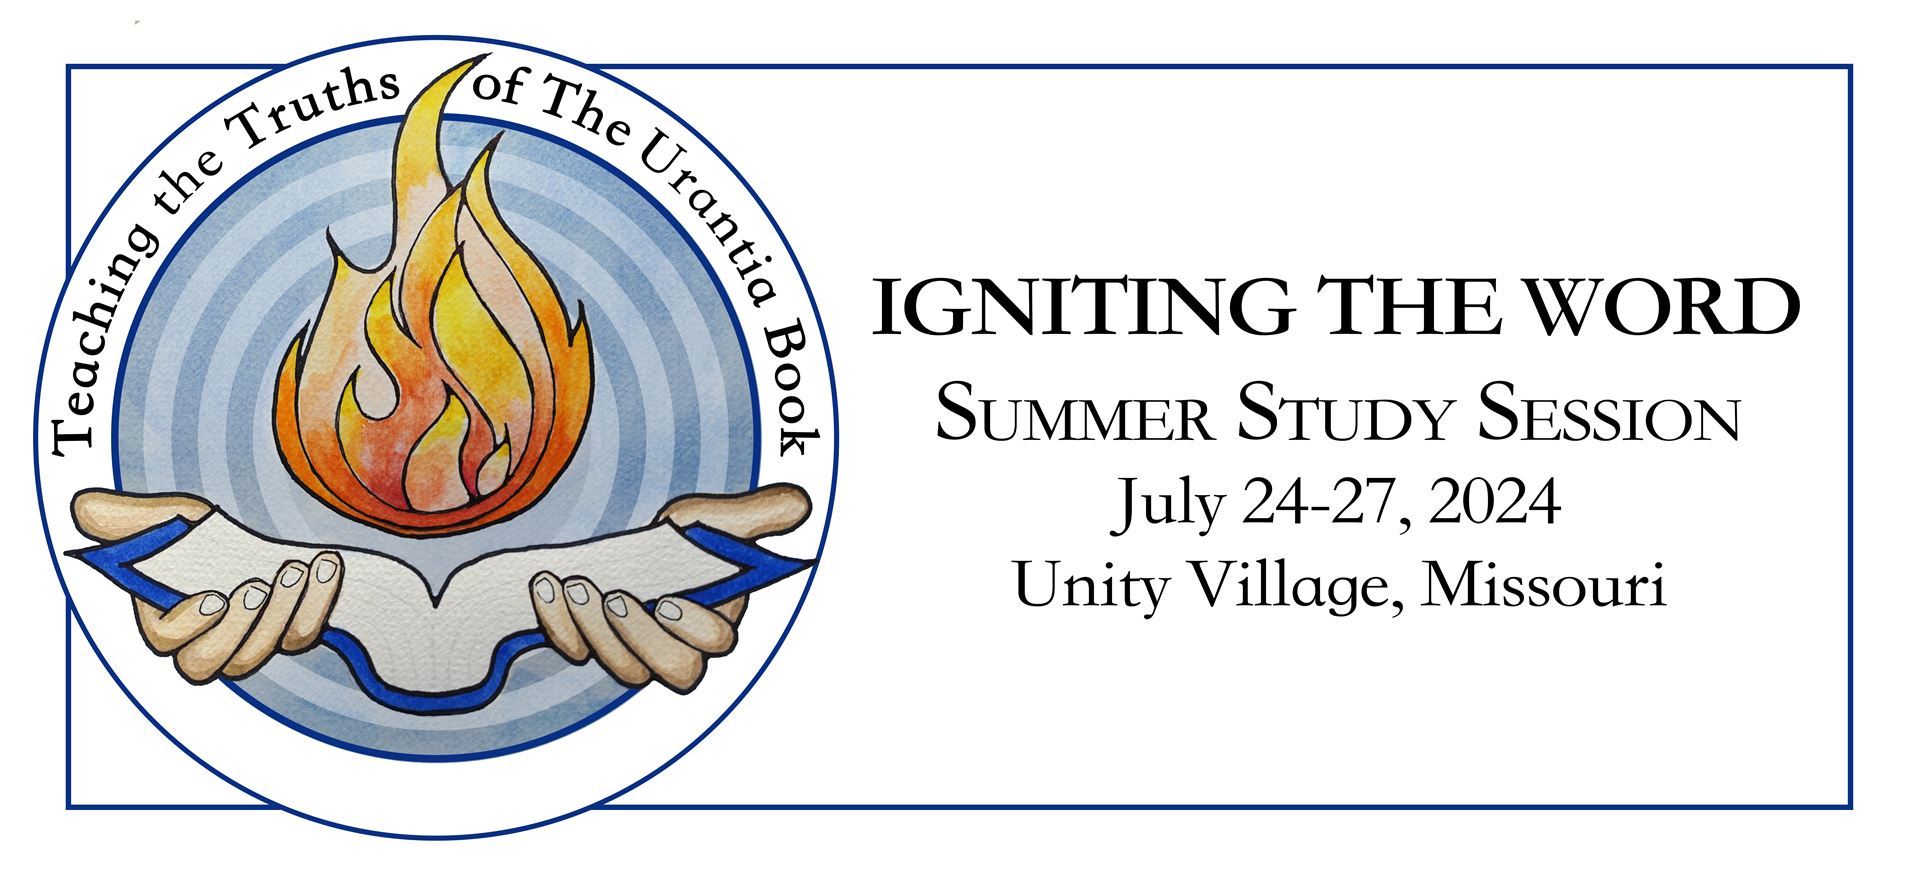 summer study session 2024 - the urantia book fellowship